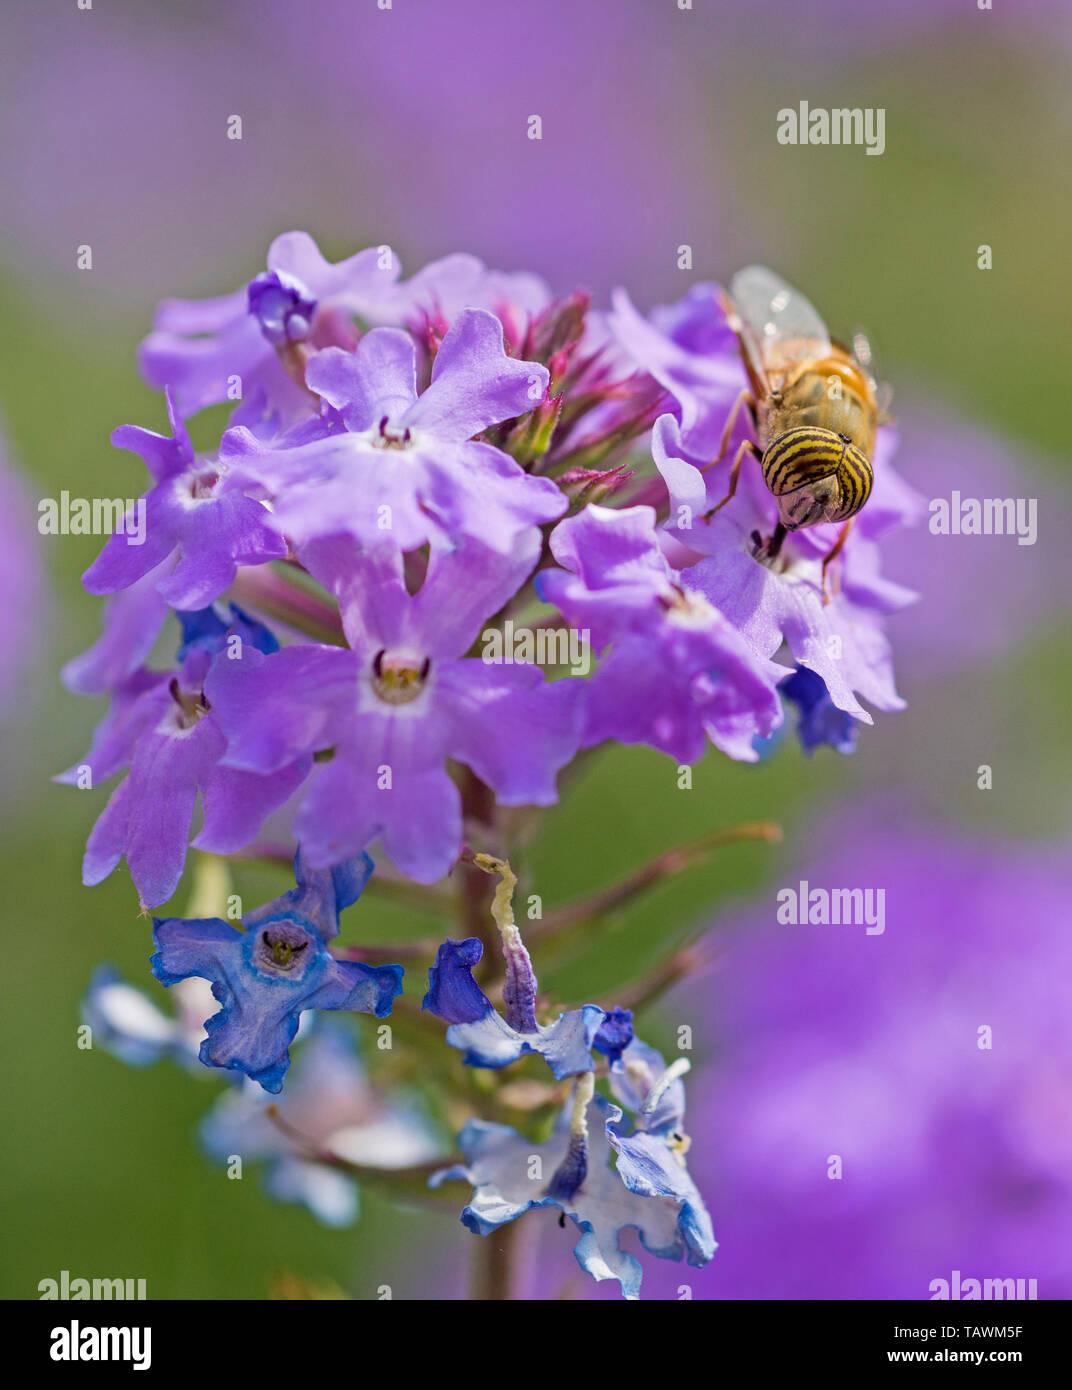 Close-up detail of a flower fly eristalinus taeniops feeding on purple Elizabeth Earle flowers Primula allionii in garden Stock Photo